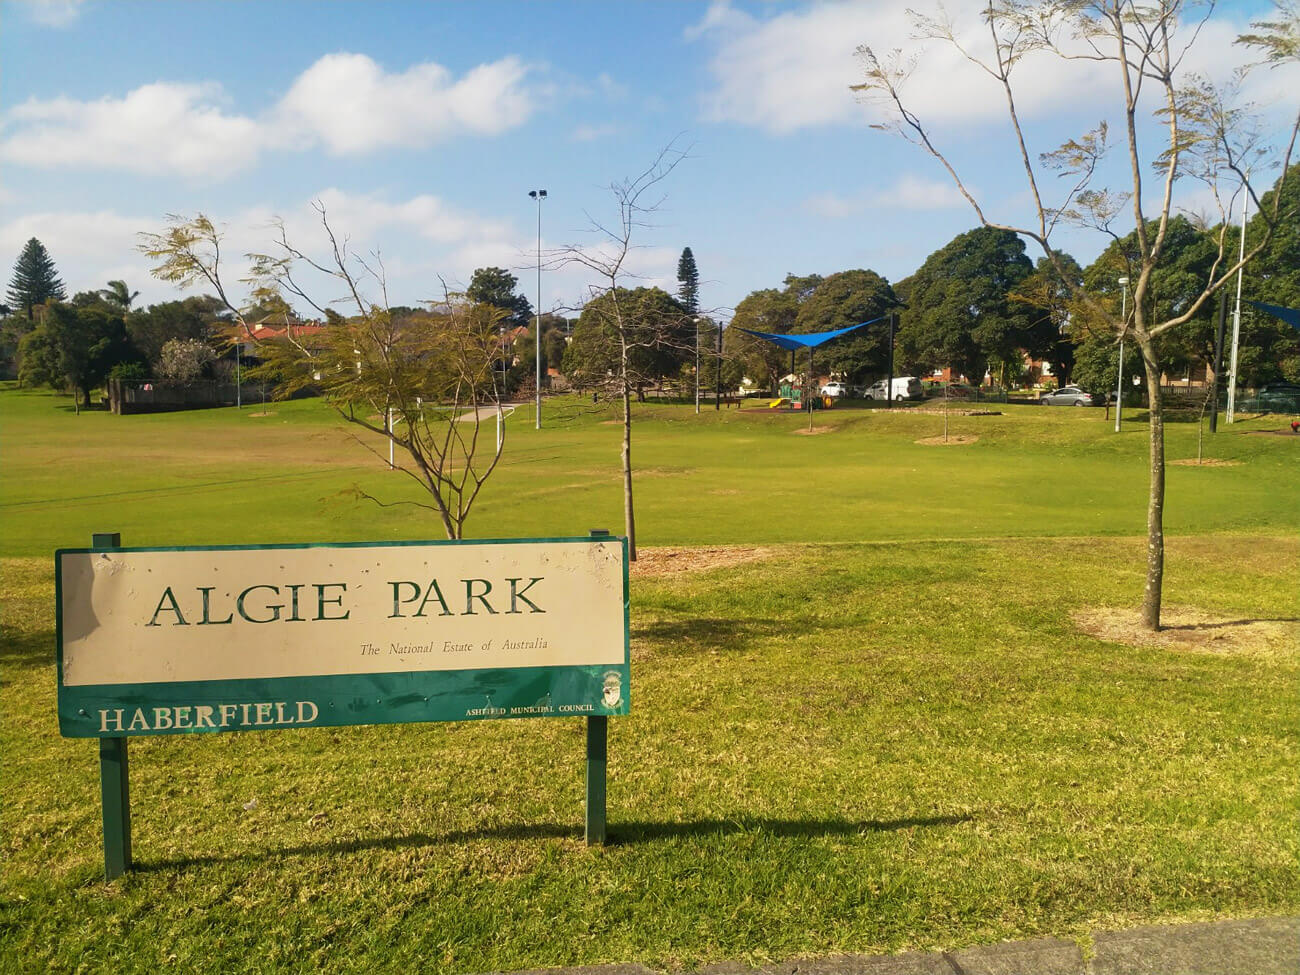 Haberfield Algie Park